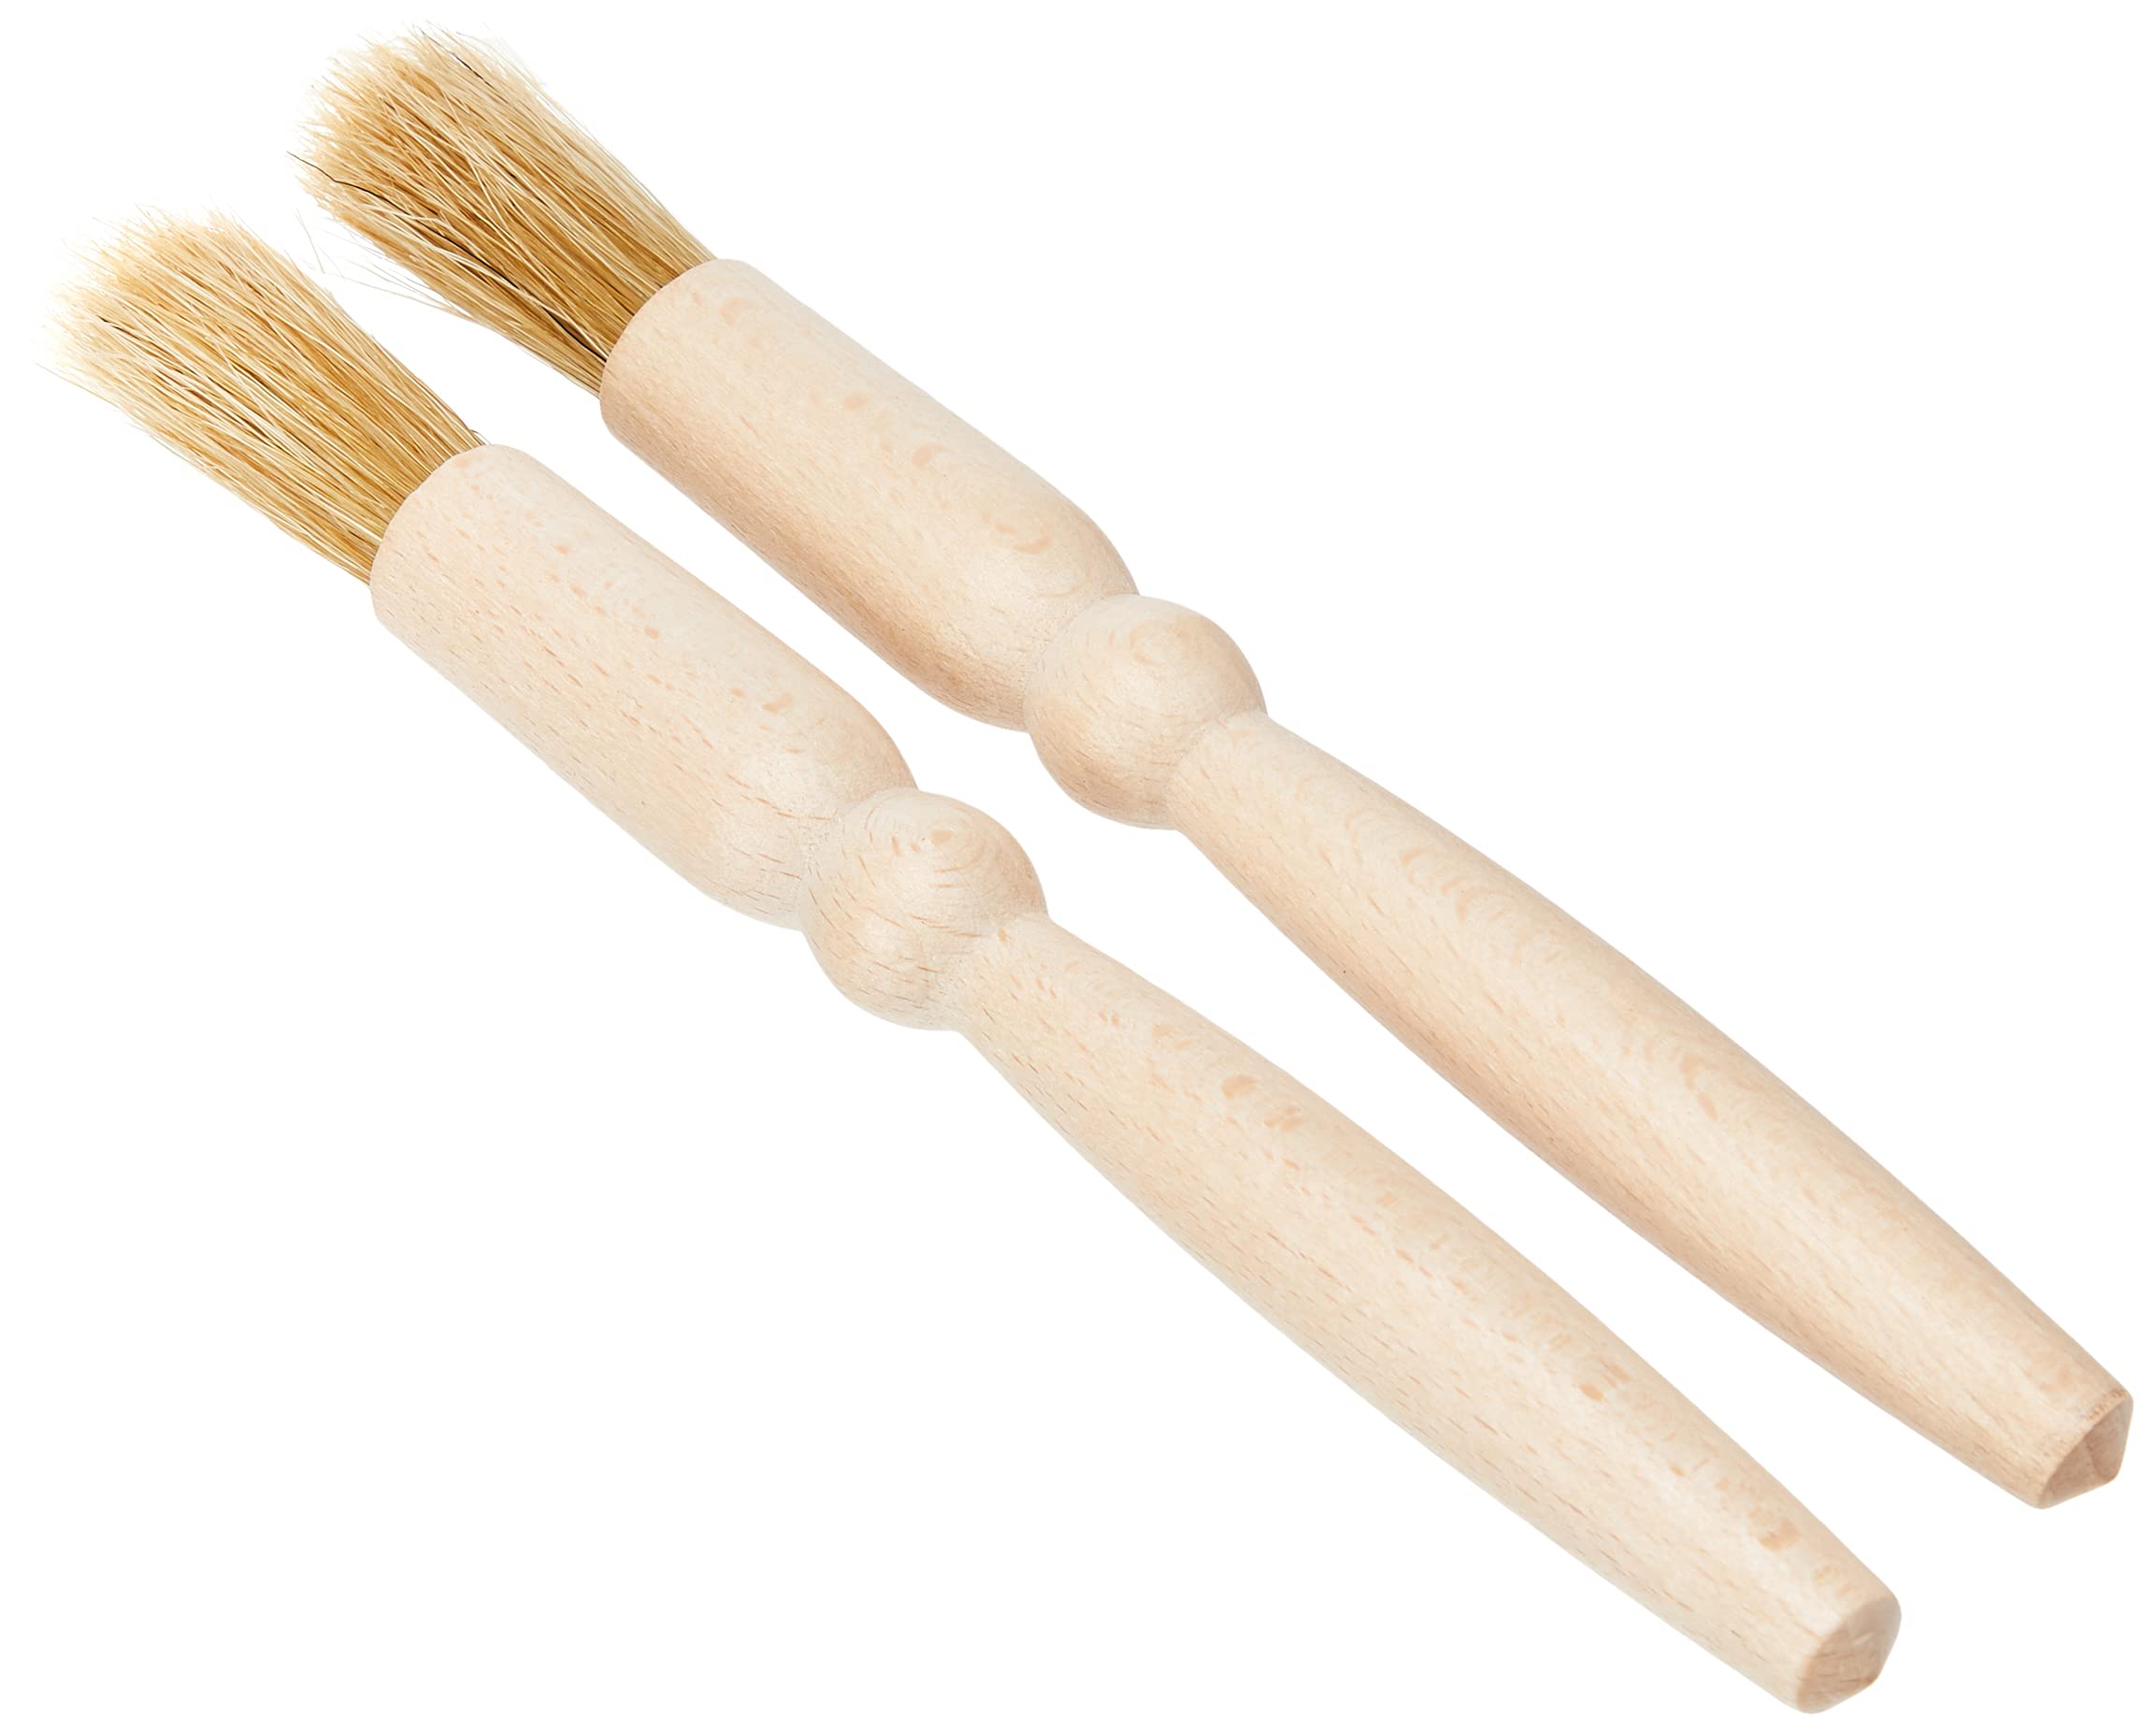 Tala Pastry Brushes